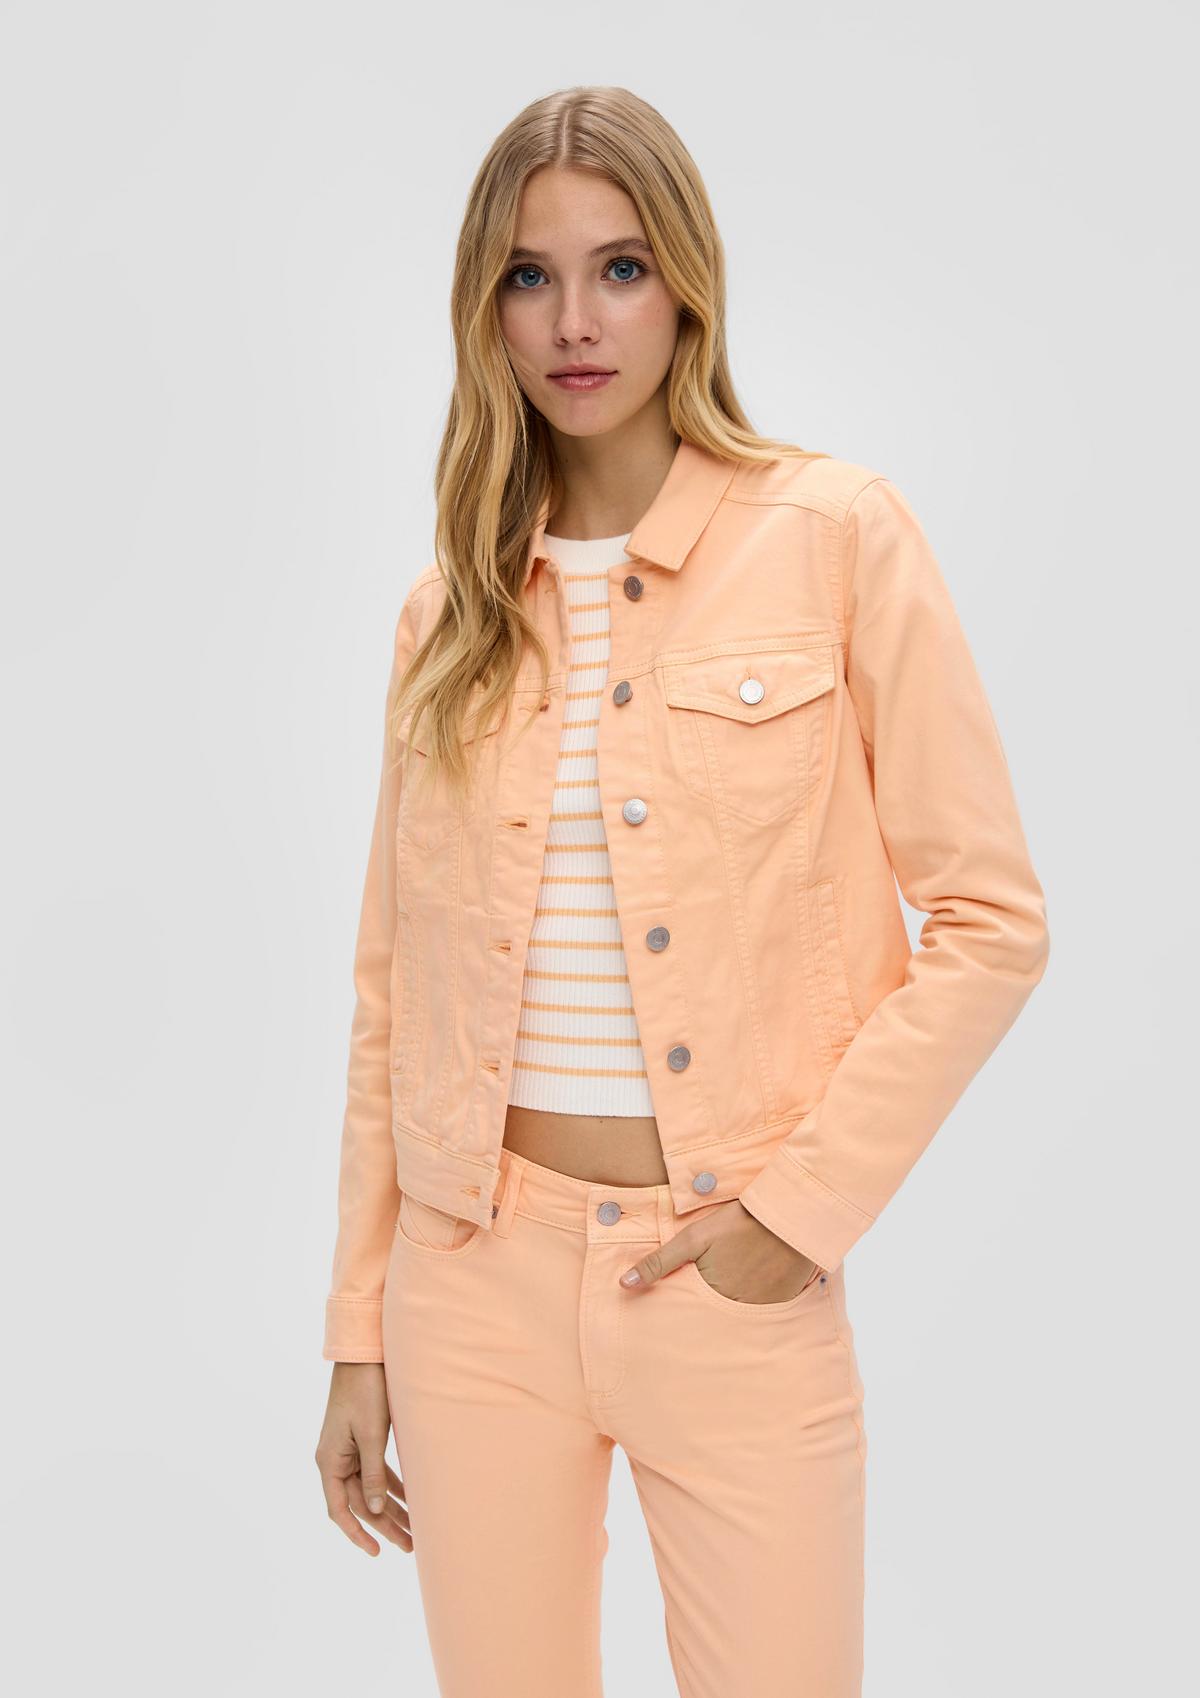 Sunisery Women's Denim Jacket, Long Sleeve Button Down Jean Casual Jacket  with Pockets 